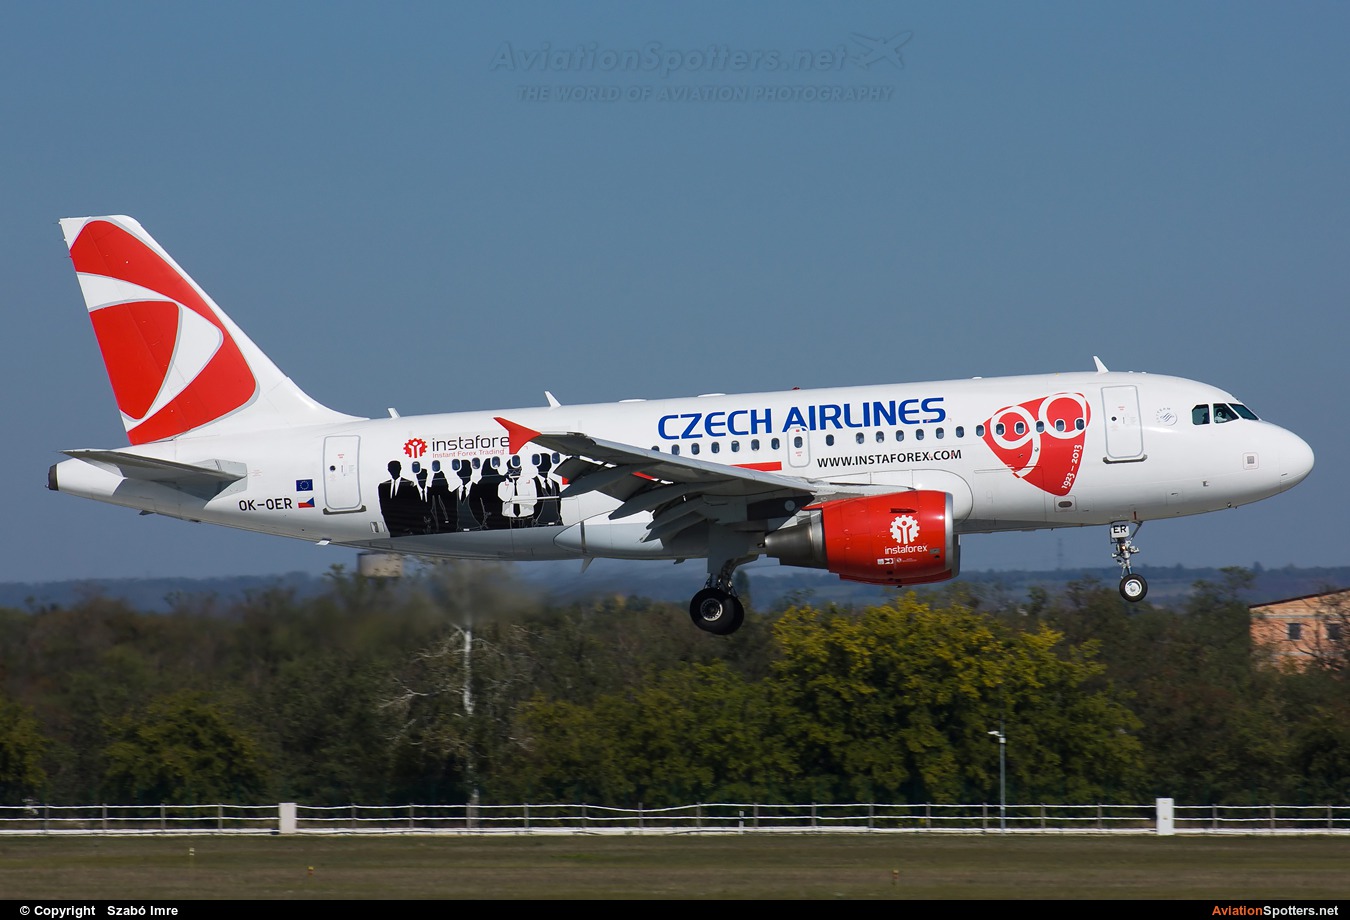 CSA - Czech Airlines  -  A319  (OK-OER) By Szabó Imre (SzImre71)